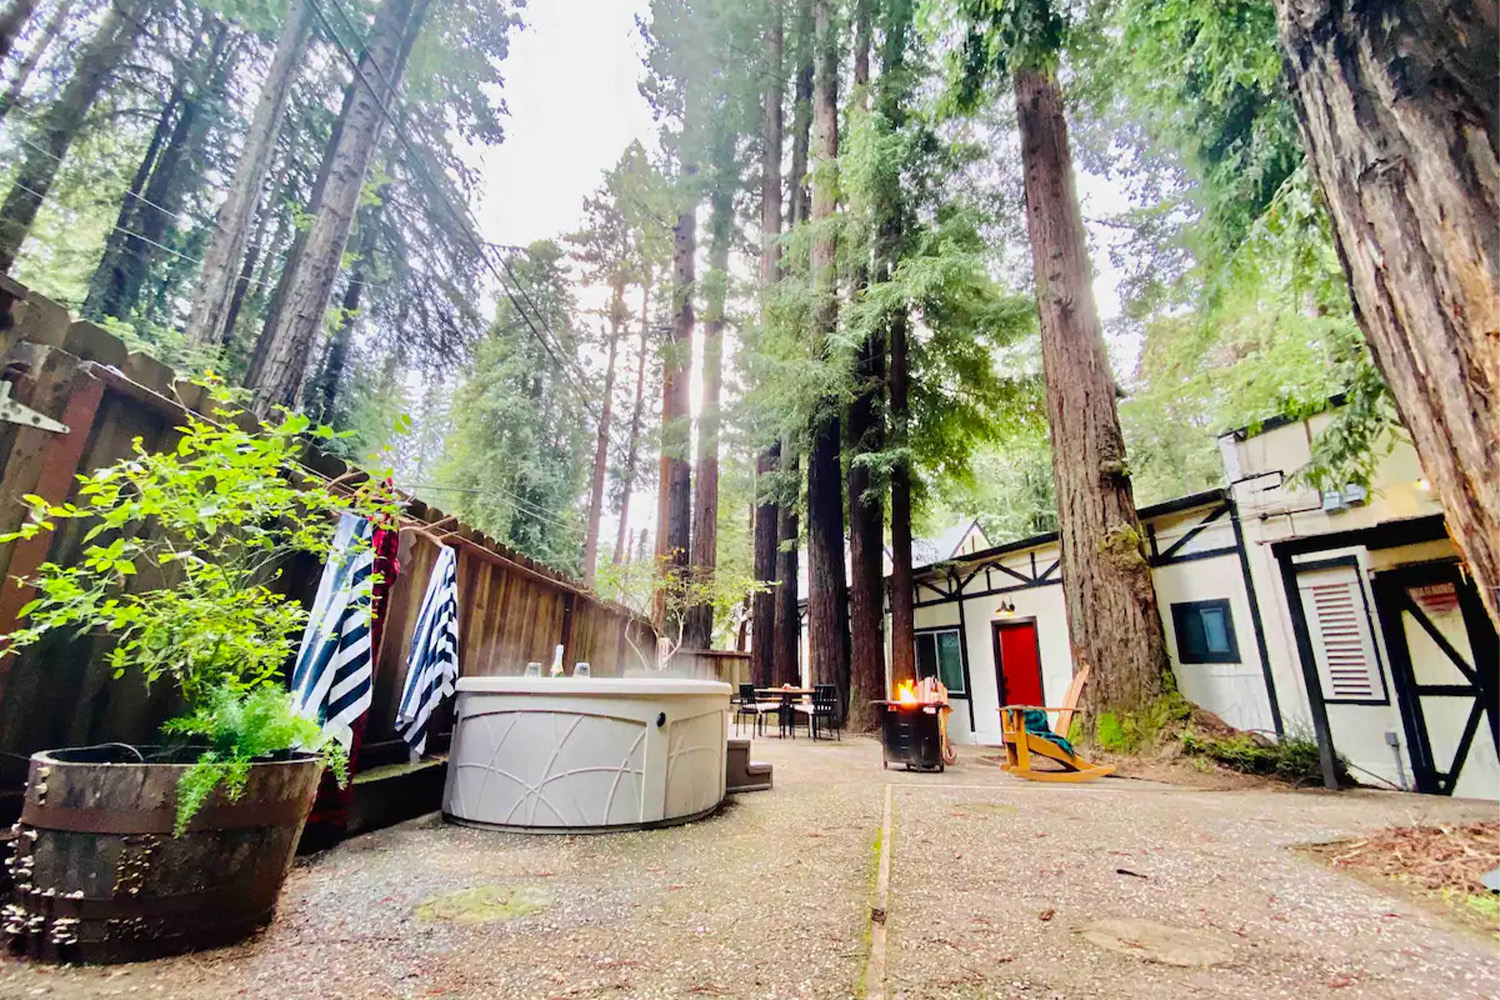 Rio Nido Lodge retreat in the Redwoods